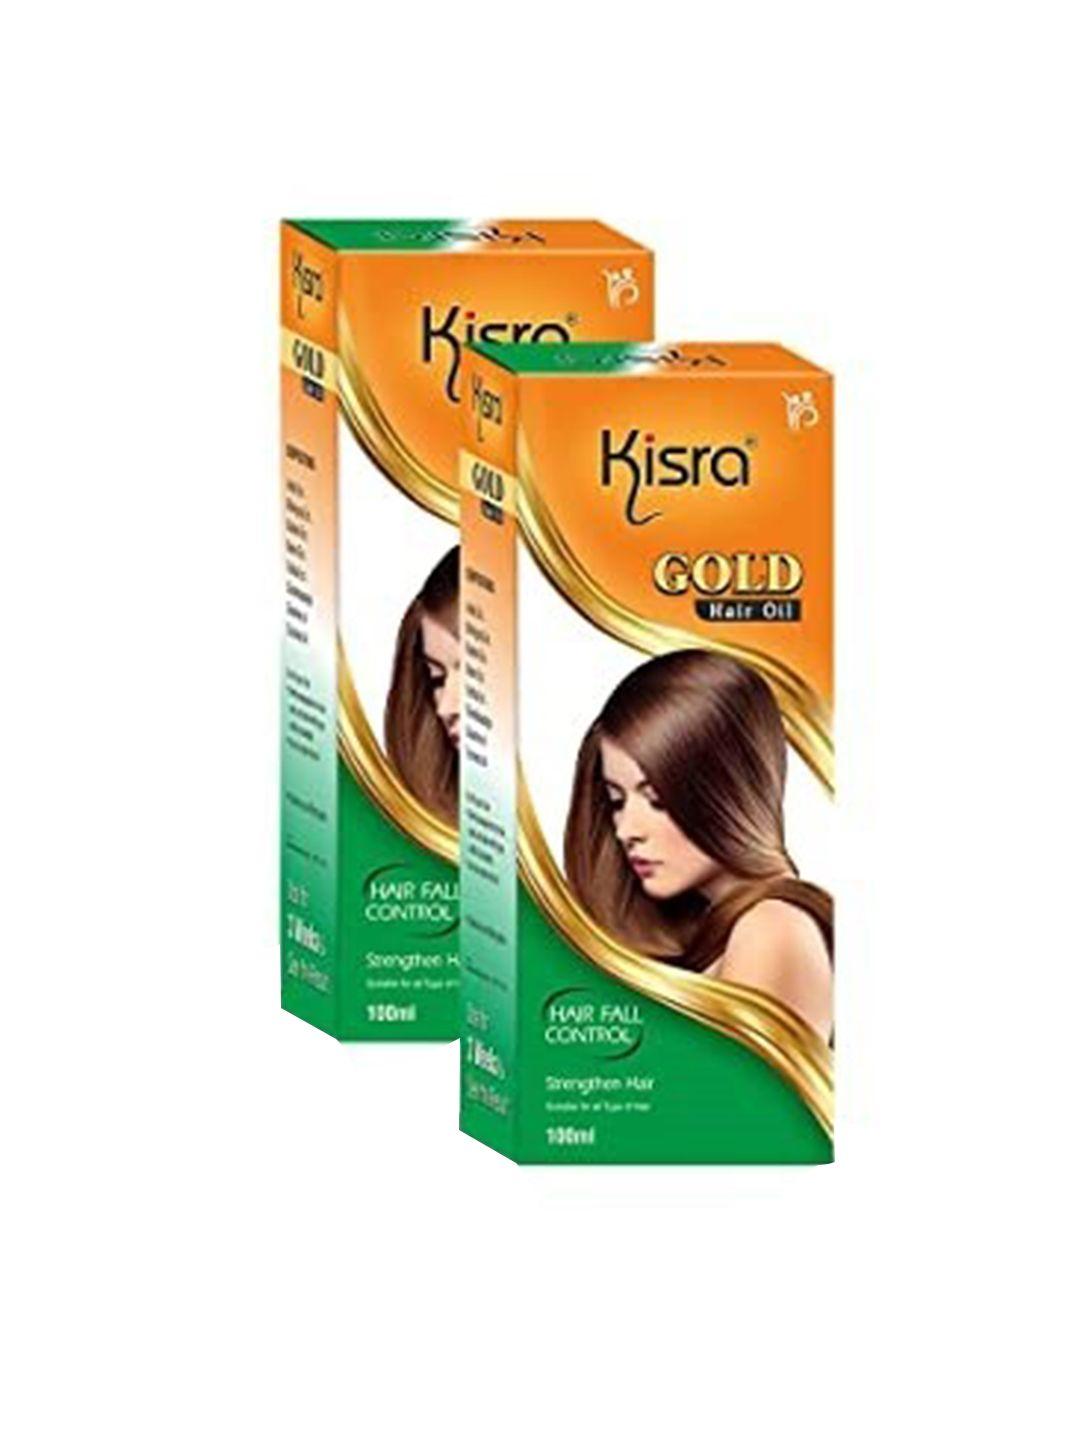 kisra gold set of 2 hair oils for frizz control & hair smoothening & hair growth100ml each